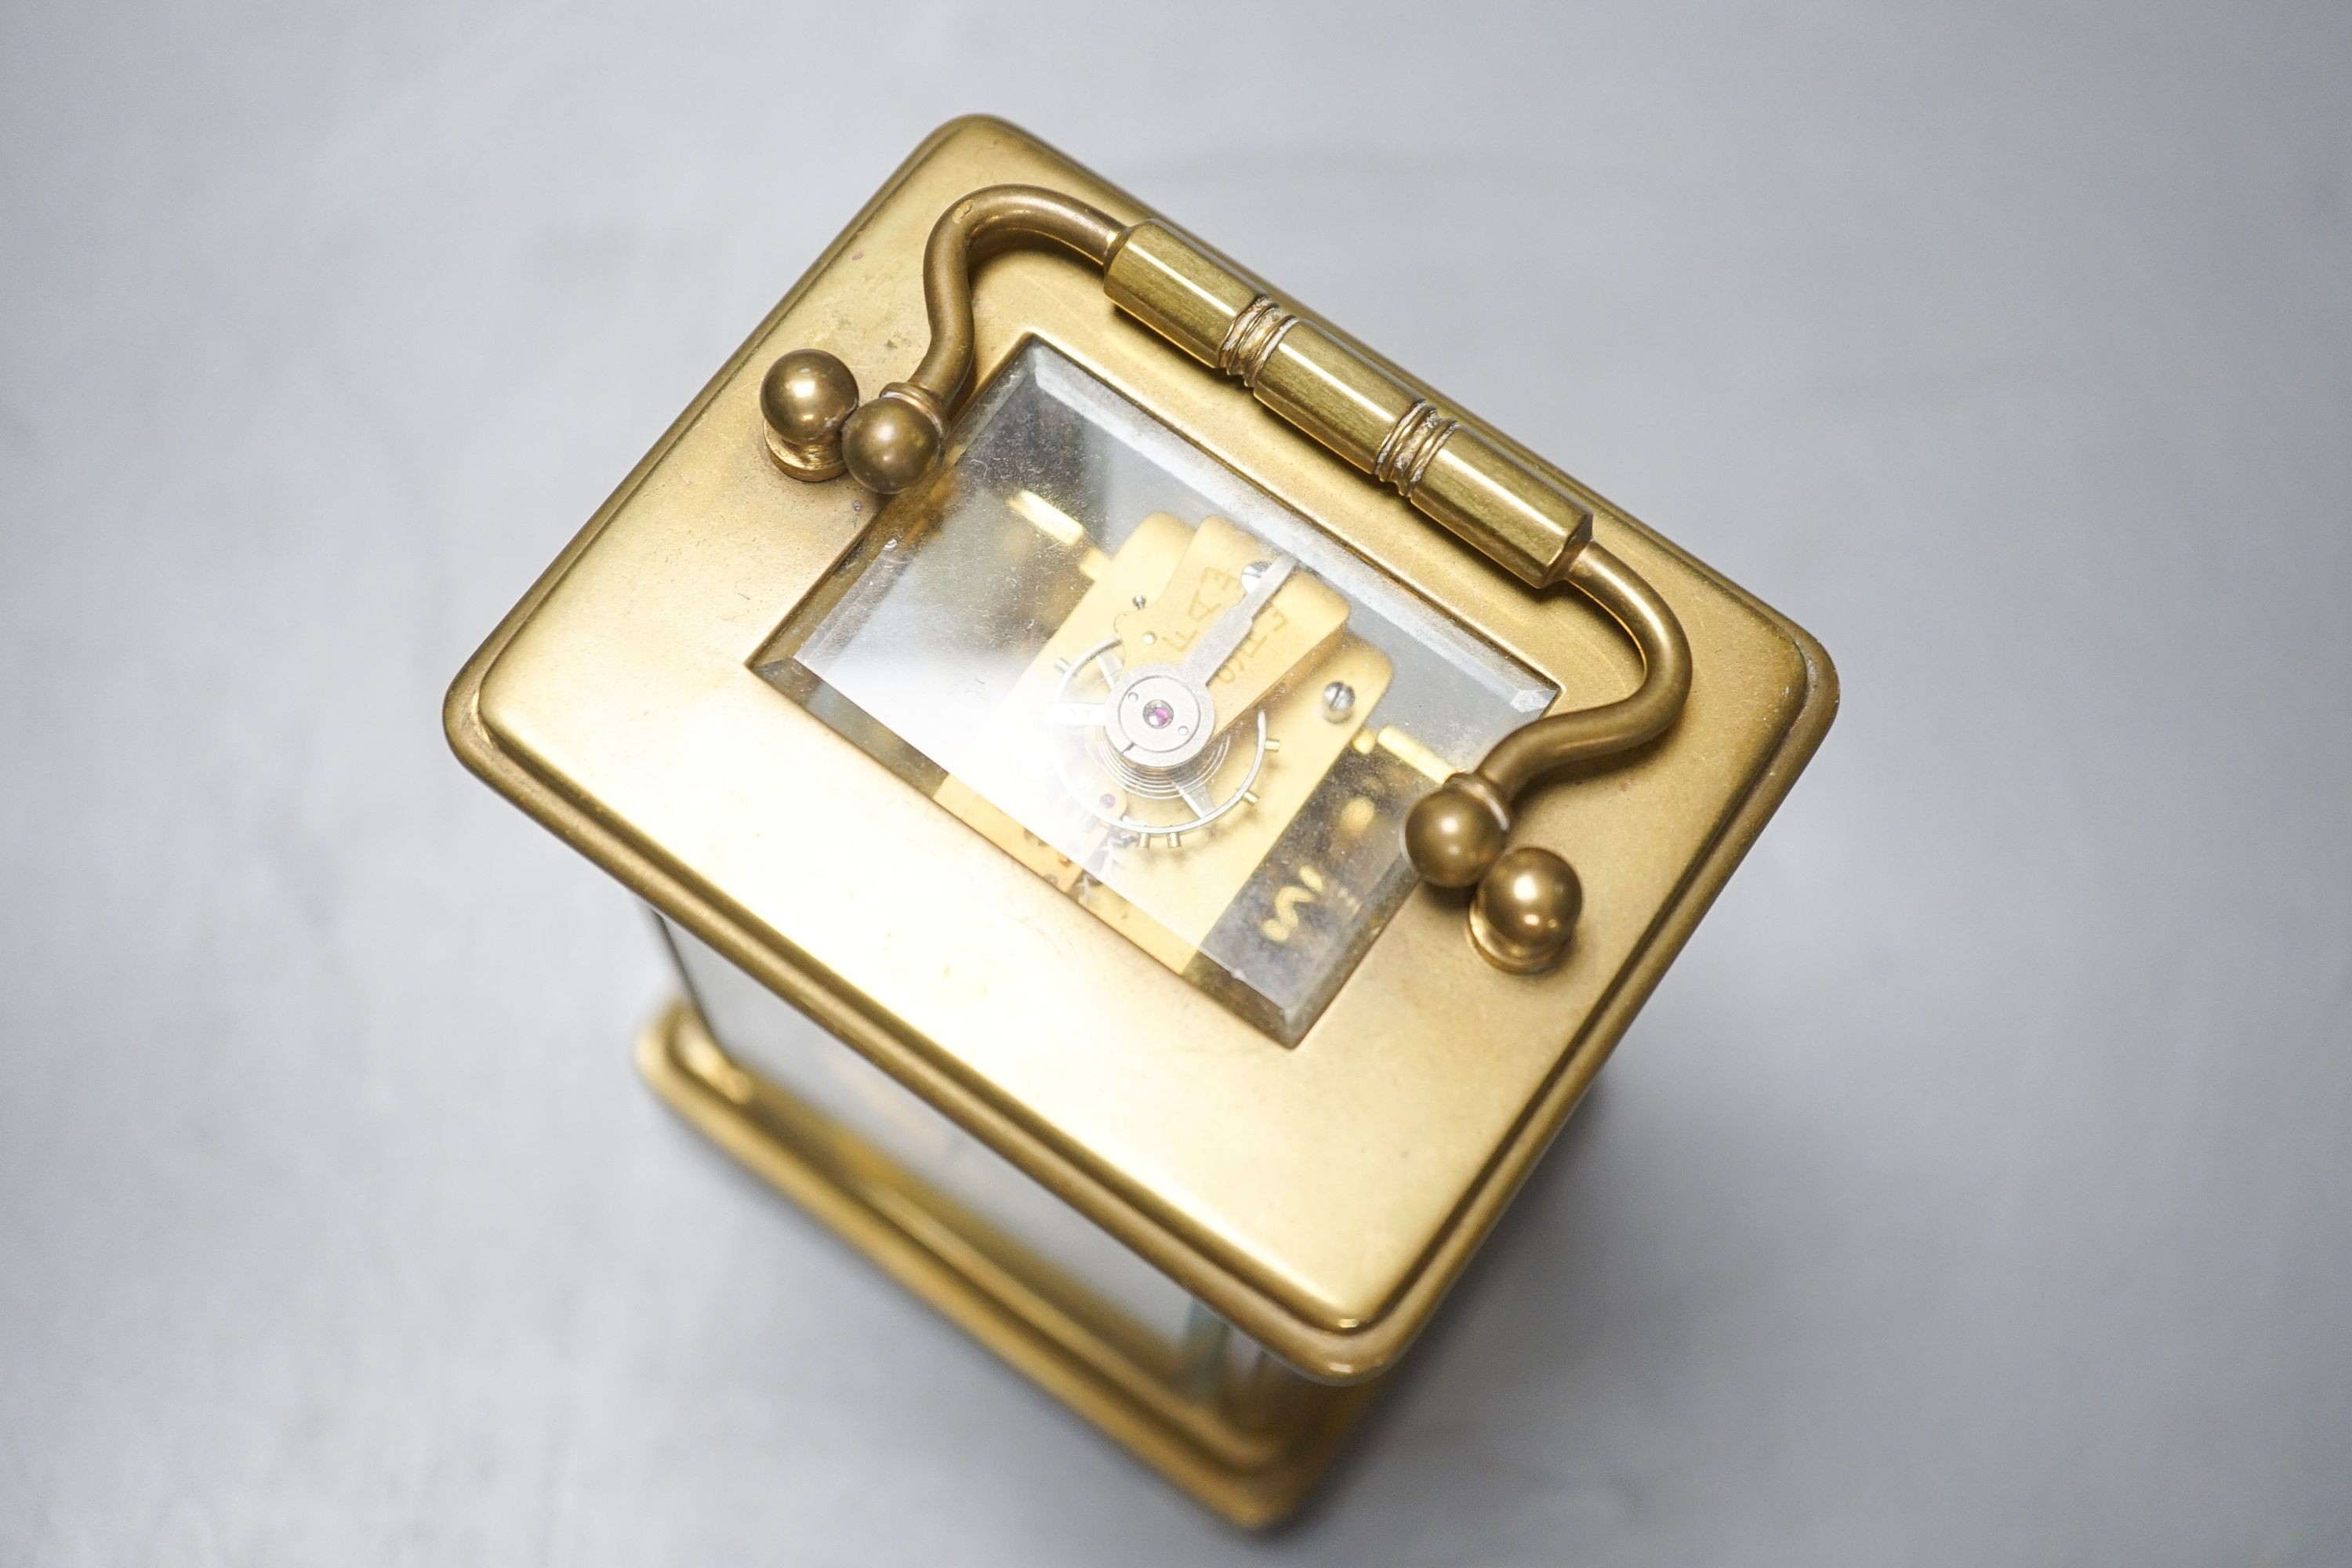 A brass carriage timepiece and key 12cm